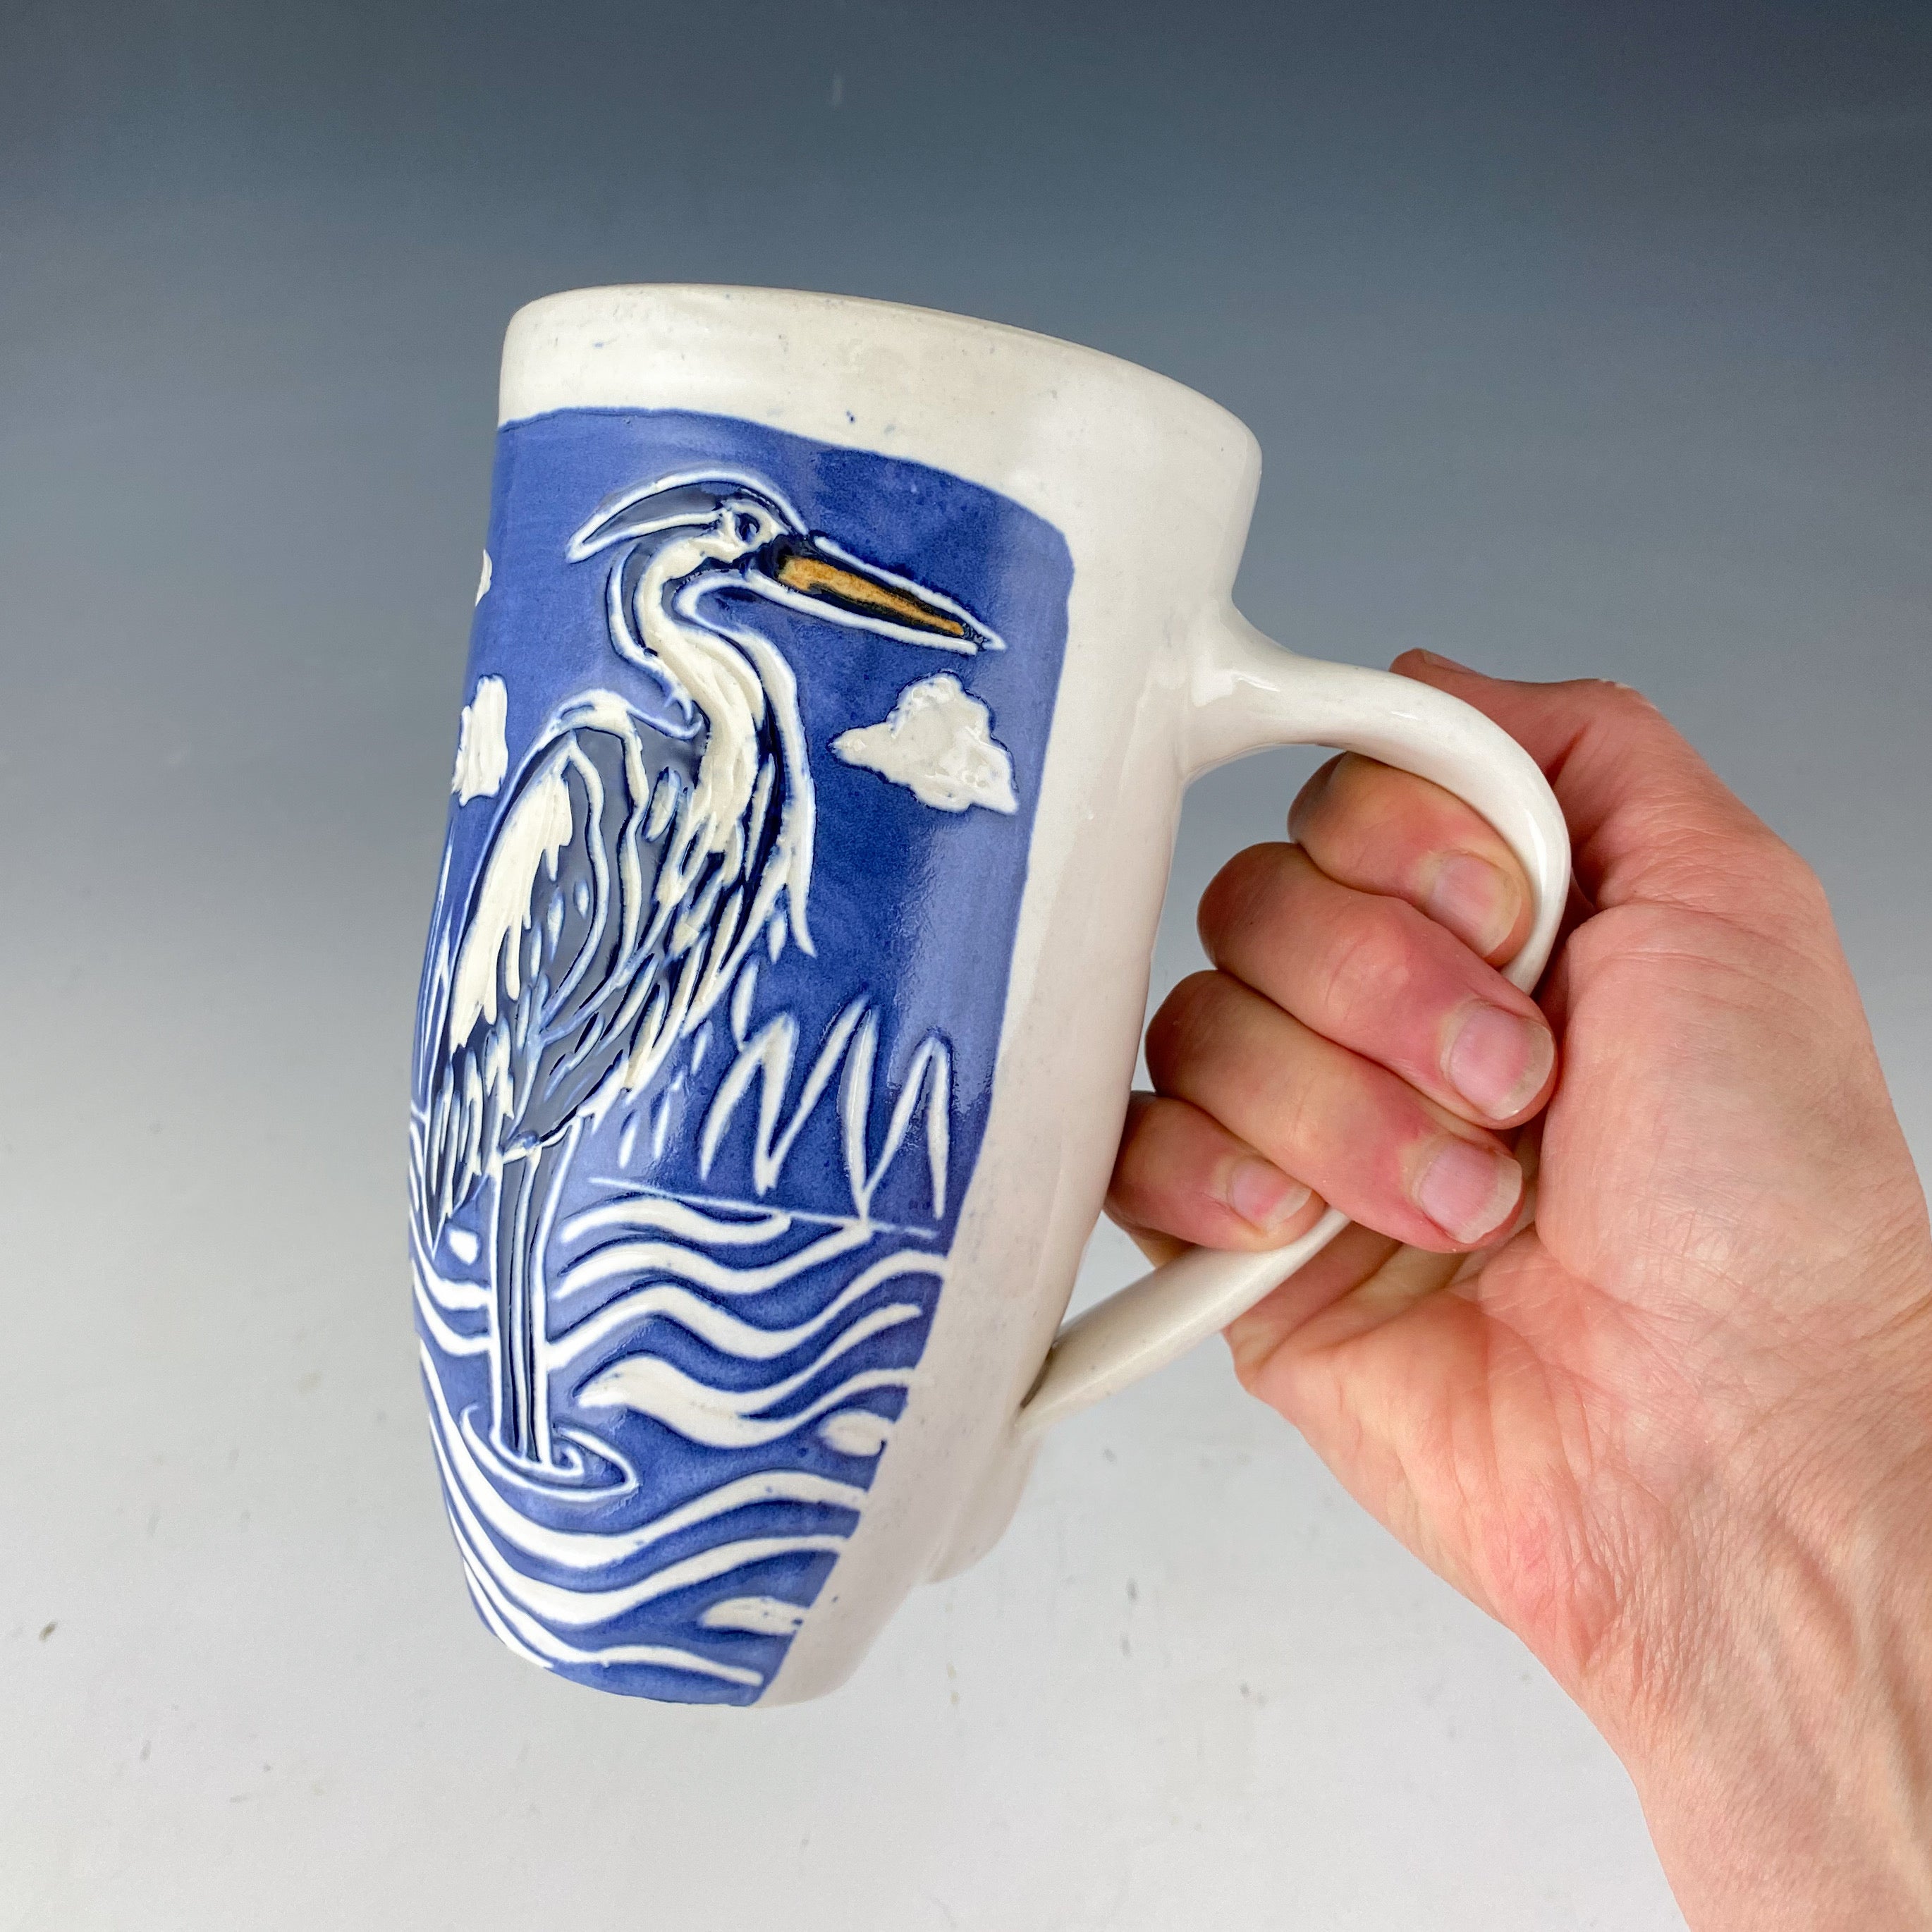 Heron Mug Tall in Blue and White